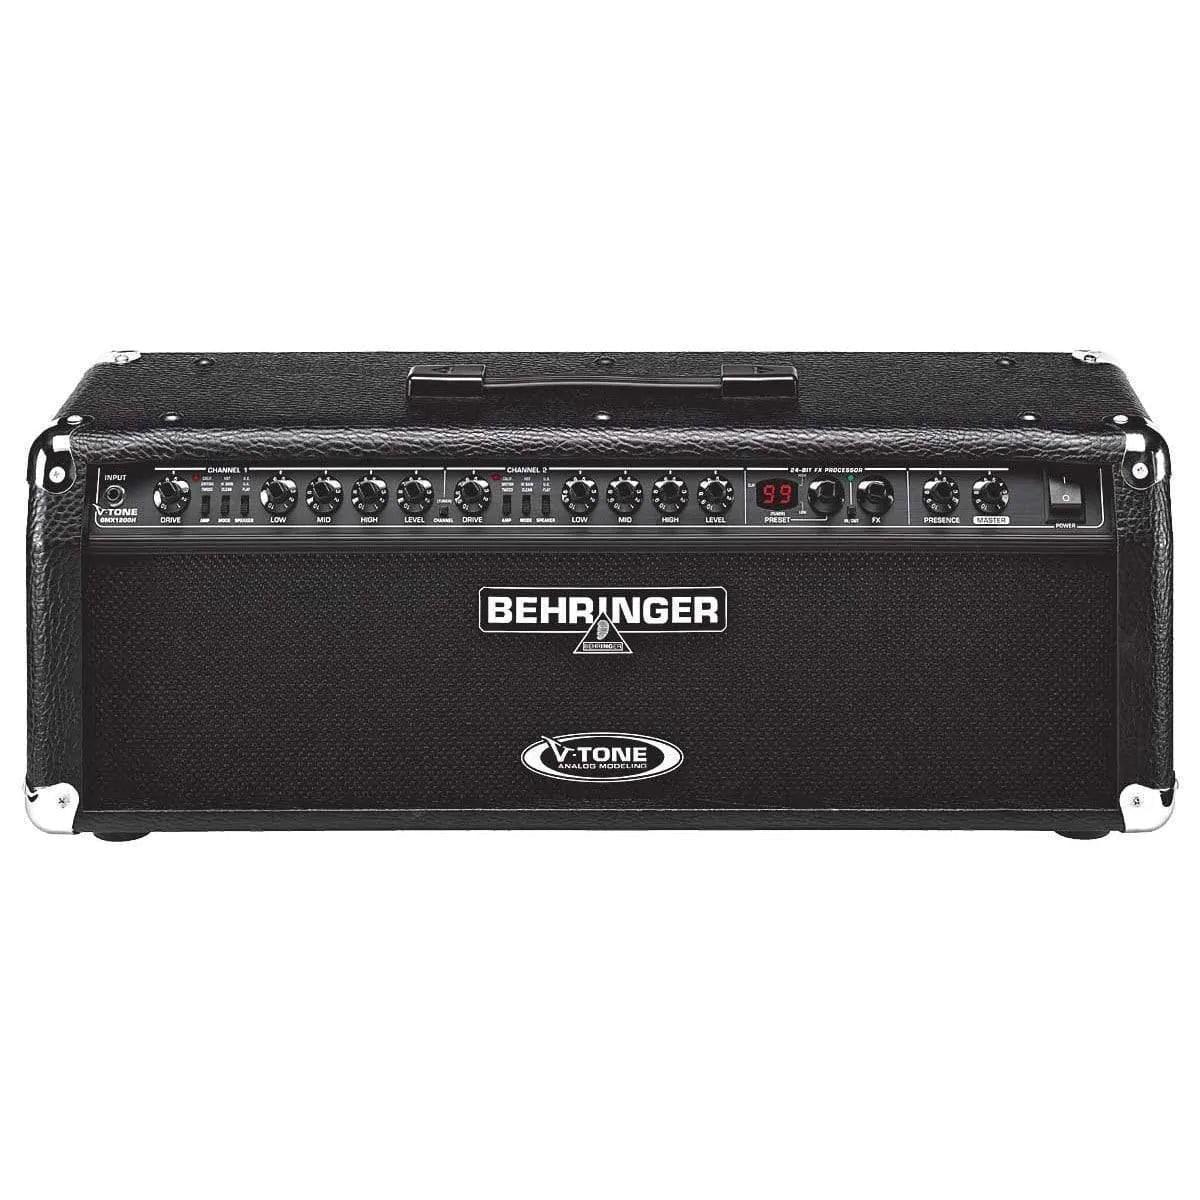 Behringer V-tone GMX1200H Guitar Amp Head